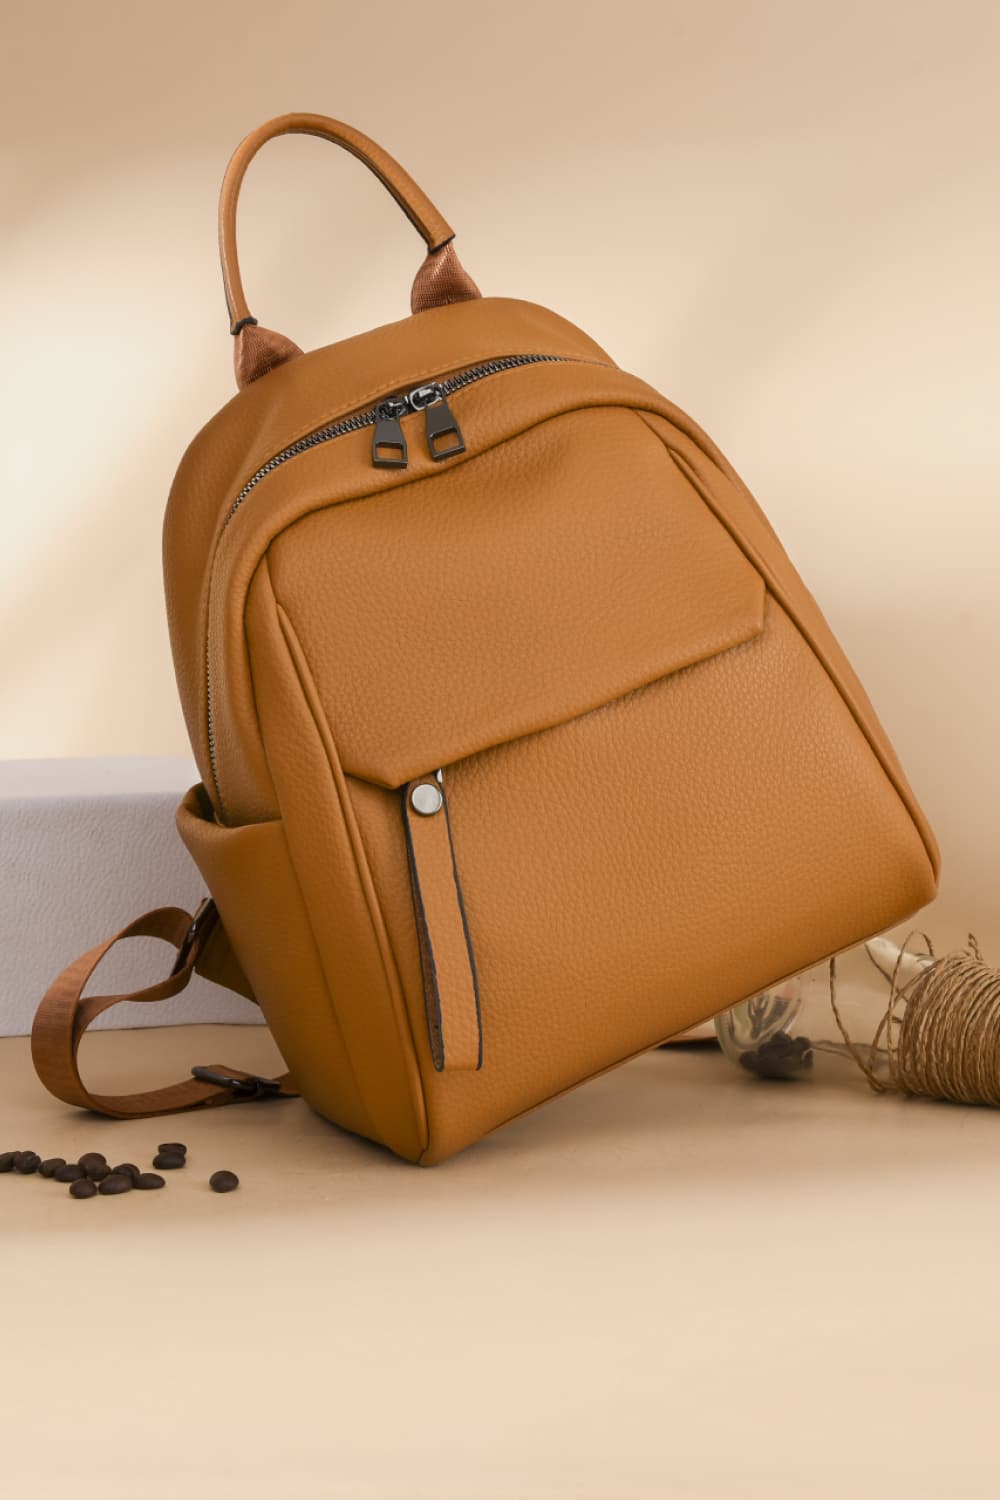 Tan Medium PU Leather Backpack Handbags